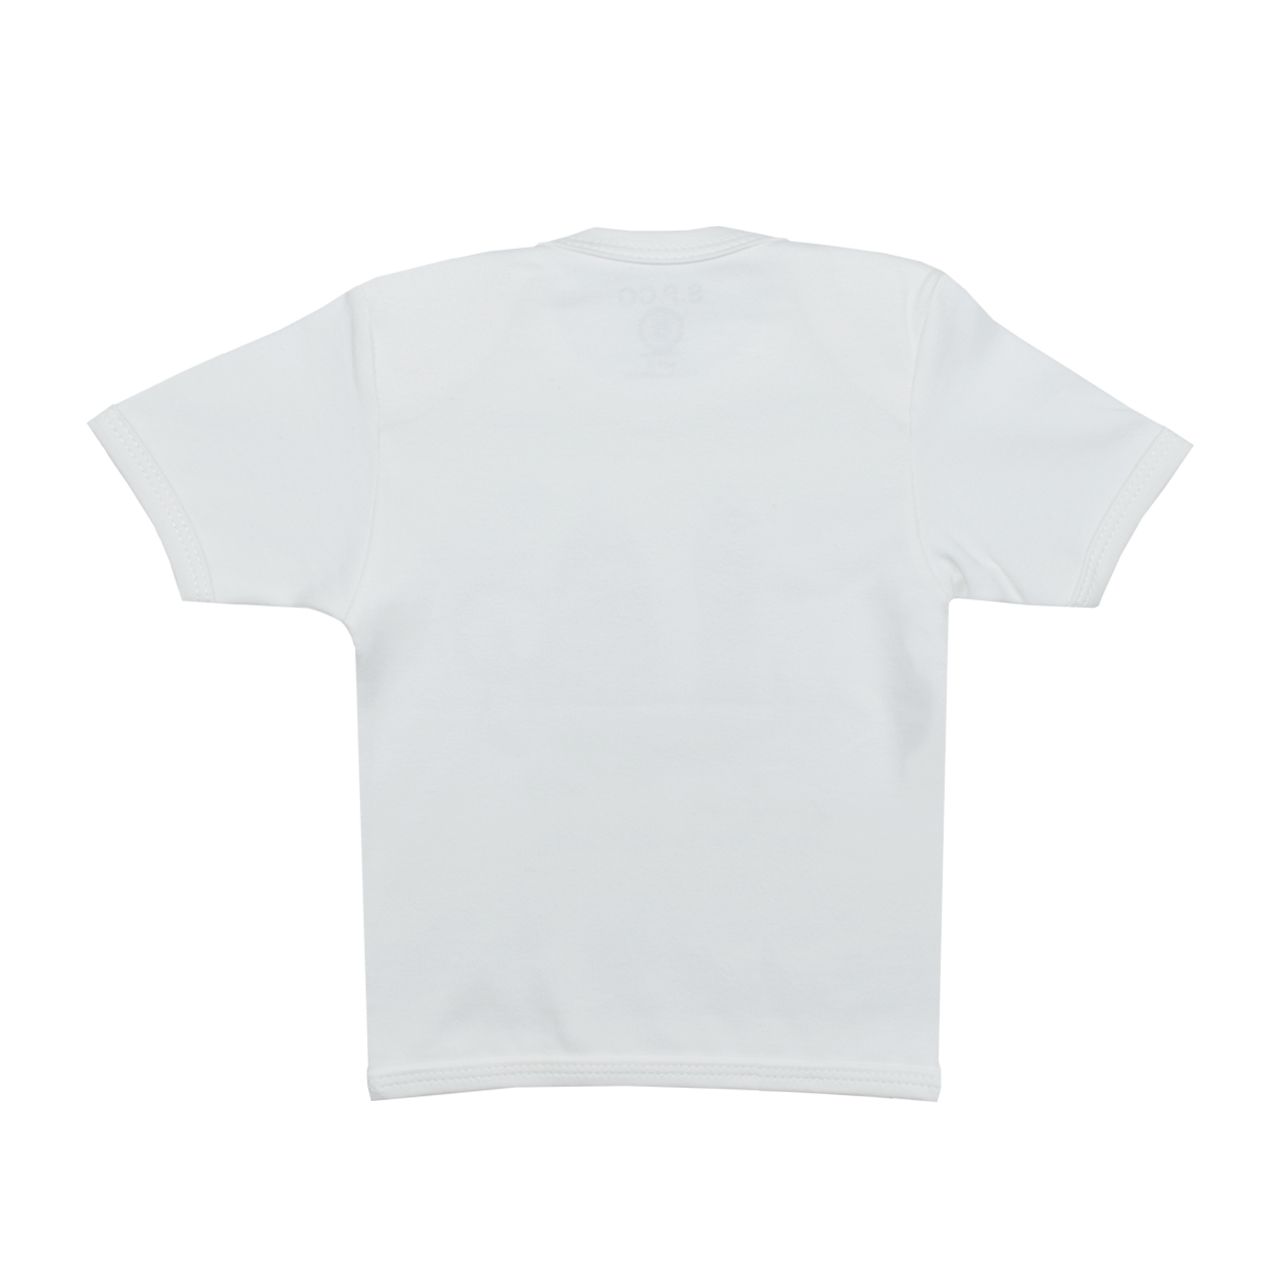 تی شرت آستین کوتاه نوزادی اسپیکو کد 300 -5 -  - 5